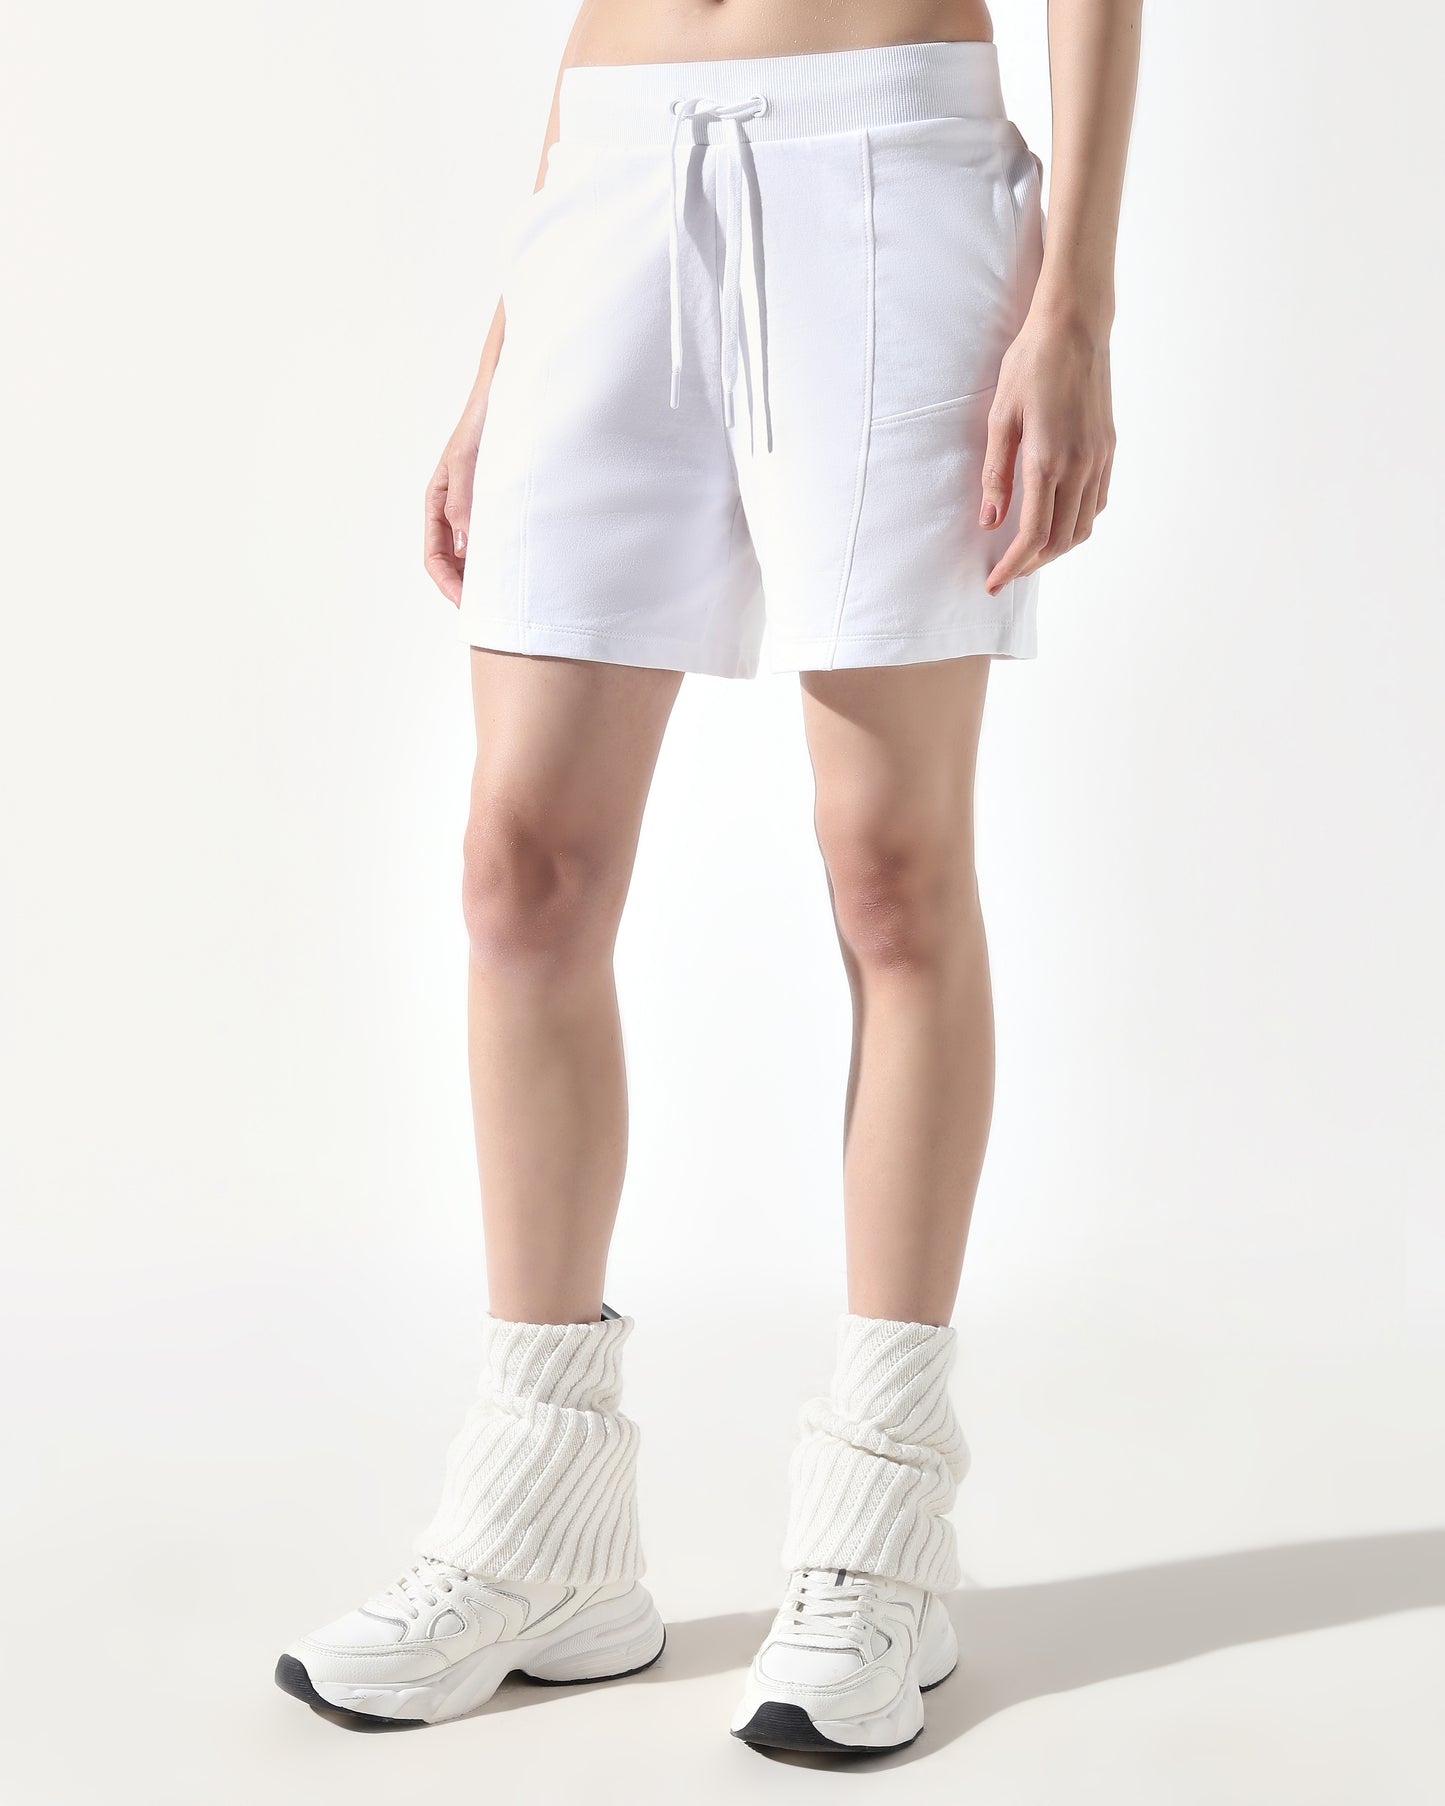 Studiofit White Cotton Mid Rise Shorts